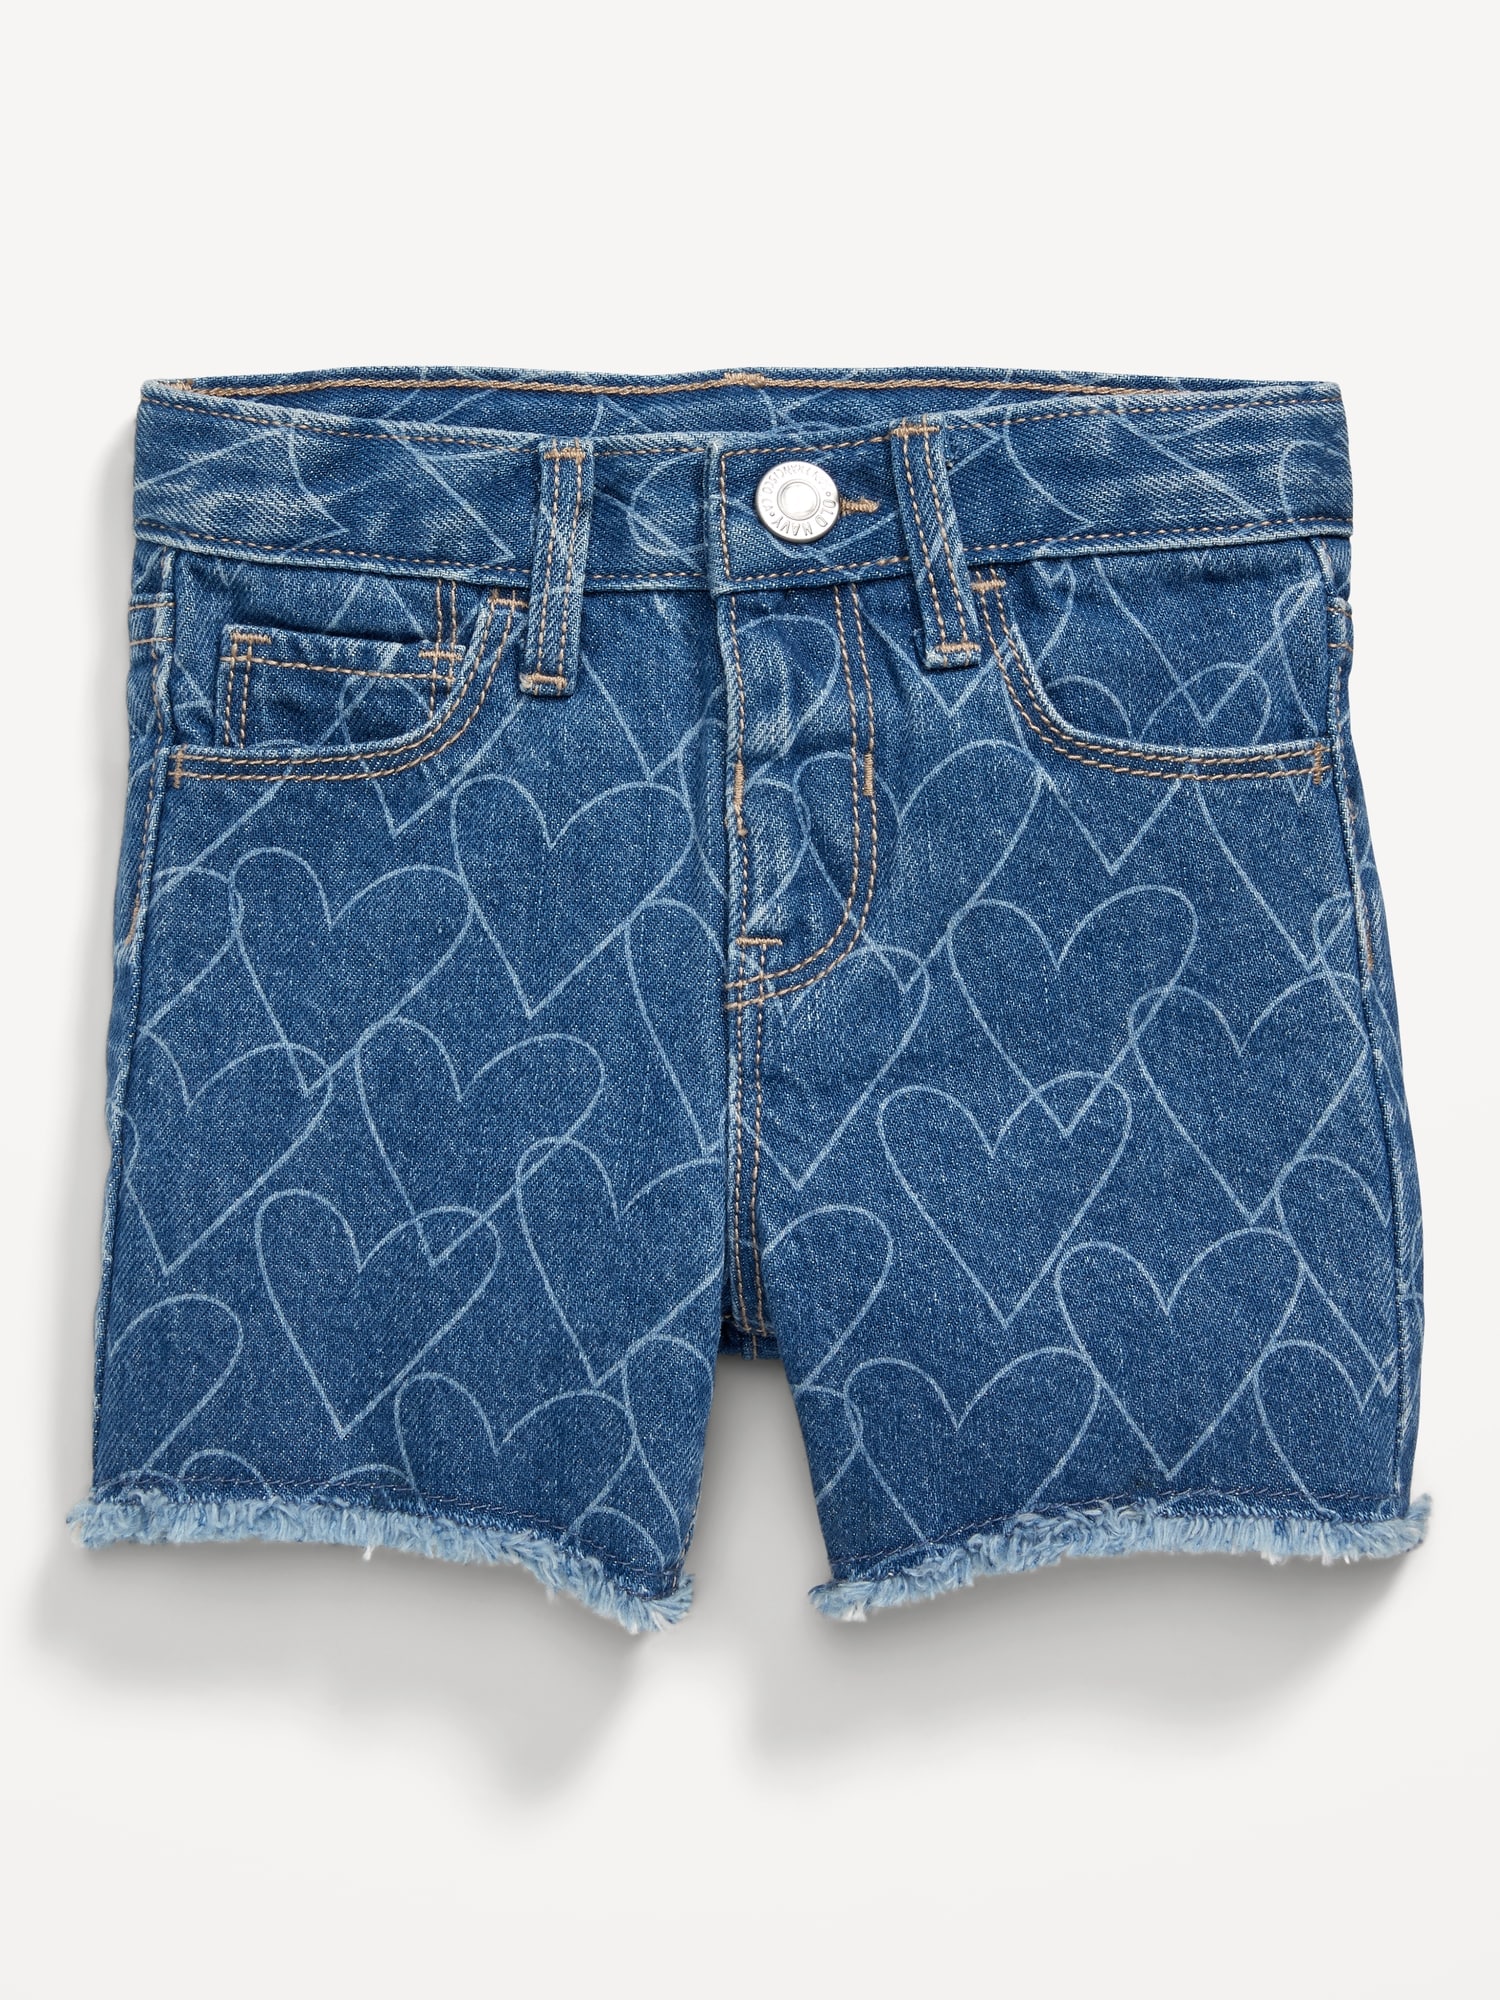 High-Waisted Frayed-Hem Jean Shorts for Toddler Girls Hot Deal